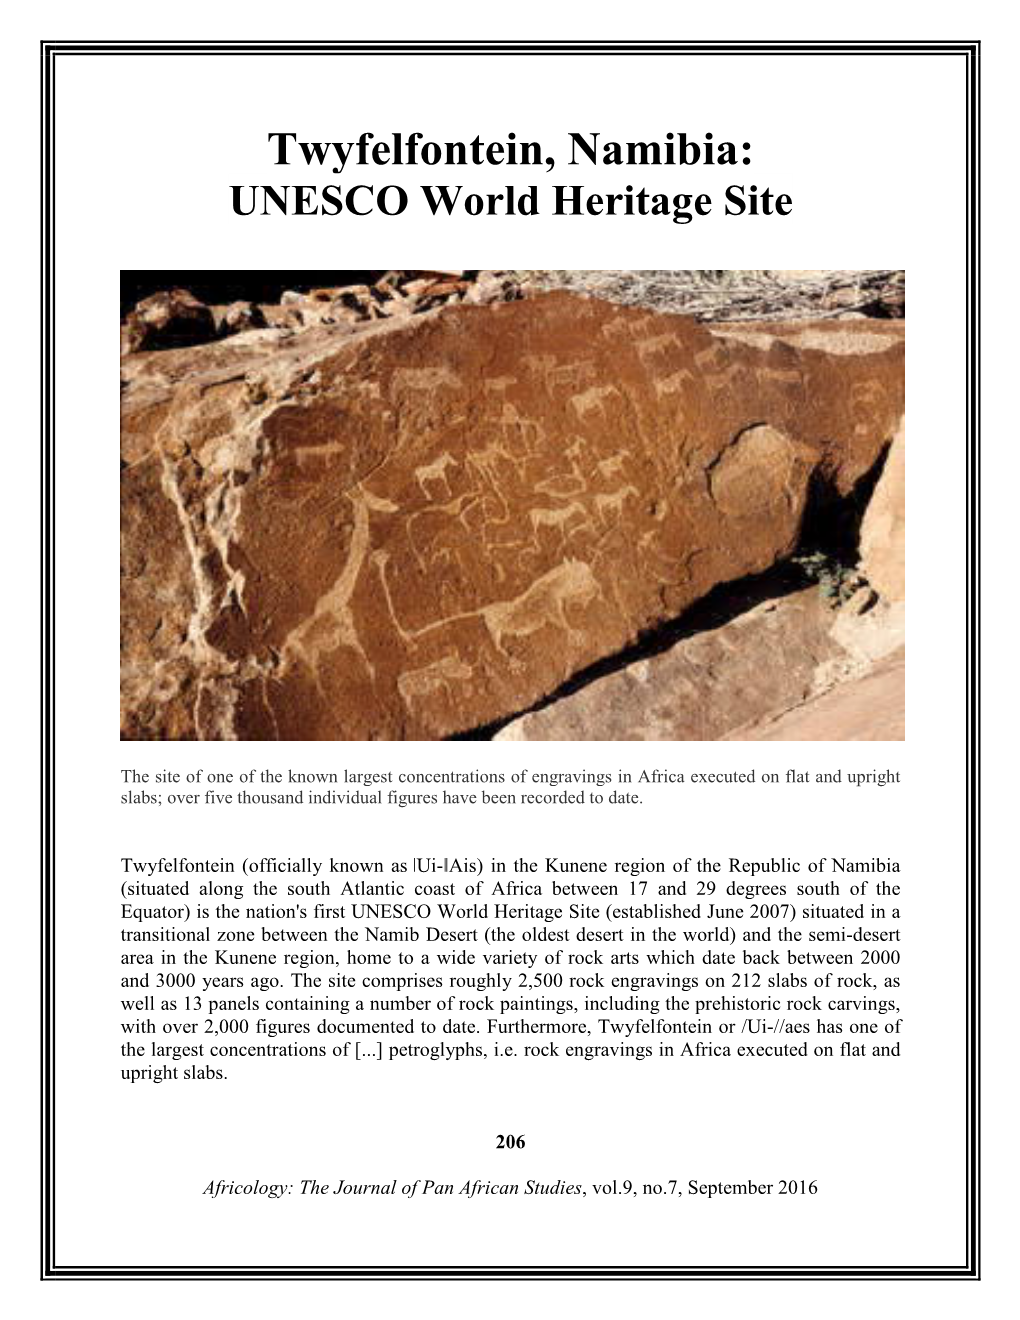 Twyfelfontein, Namibia: UNESCO World Heritage Site